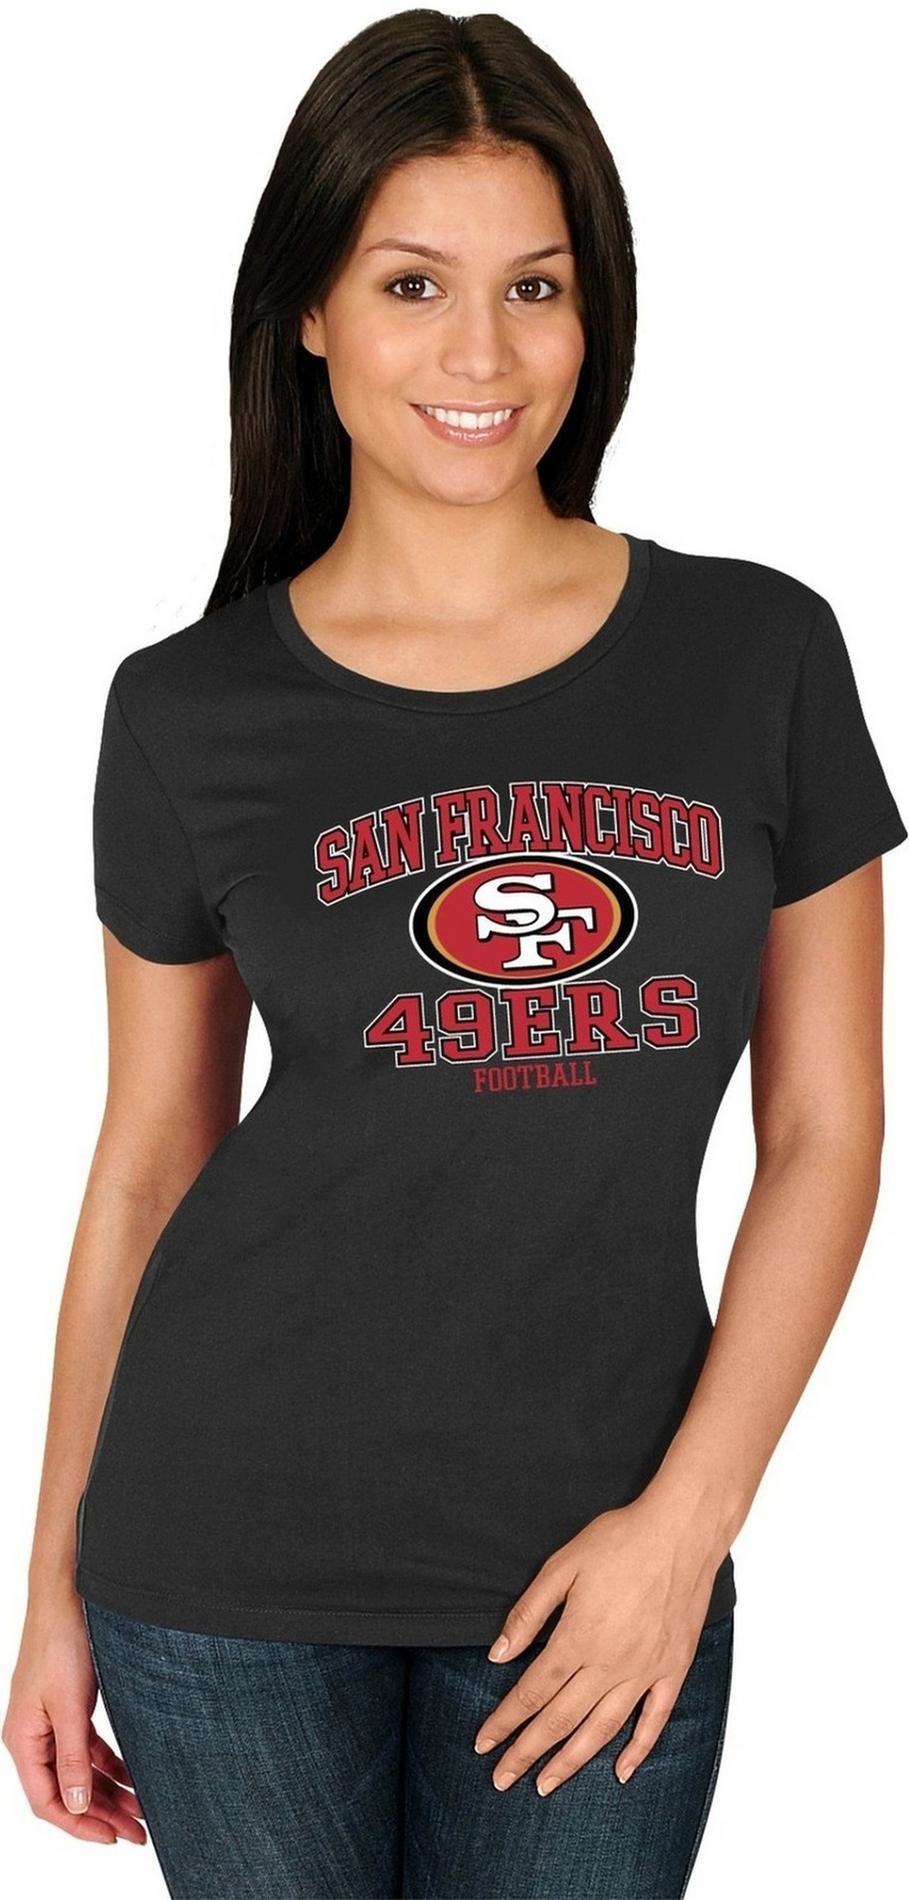 NFL Women's Graphic T-Shirt - San Francisco 49ers